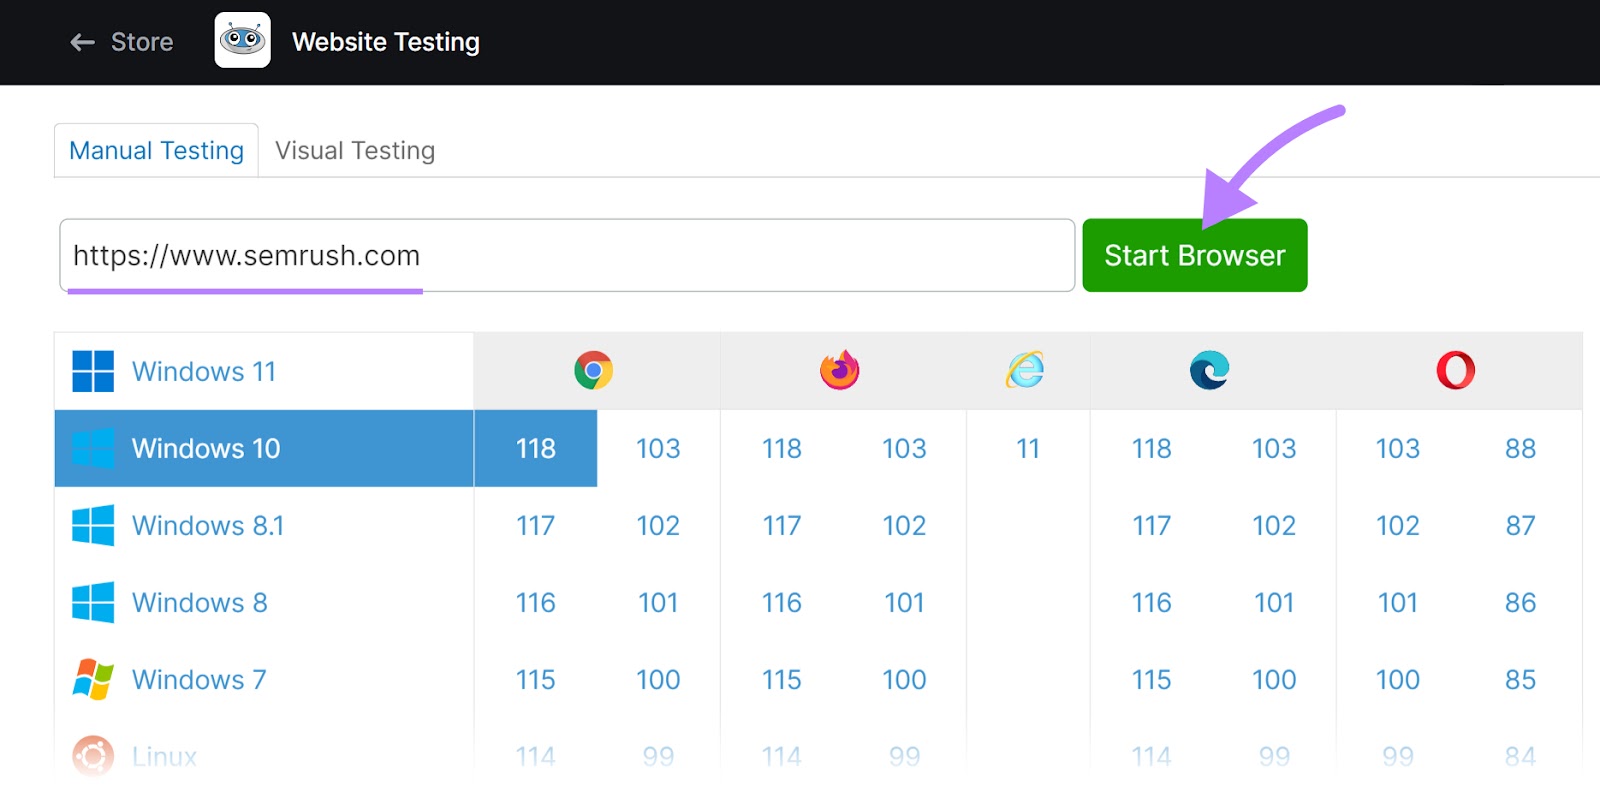 “Manual Testing” tab in Website Testing tool, with "semrush.com" domain and "Windows 10" selected